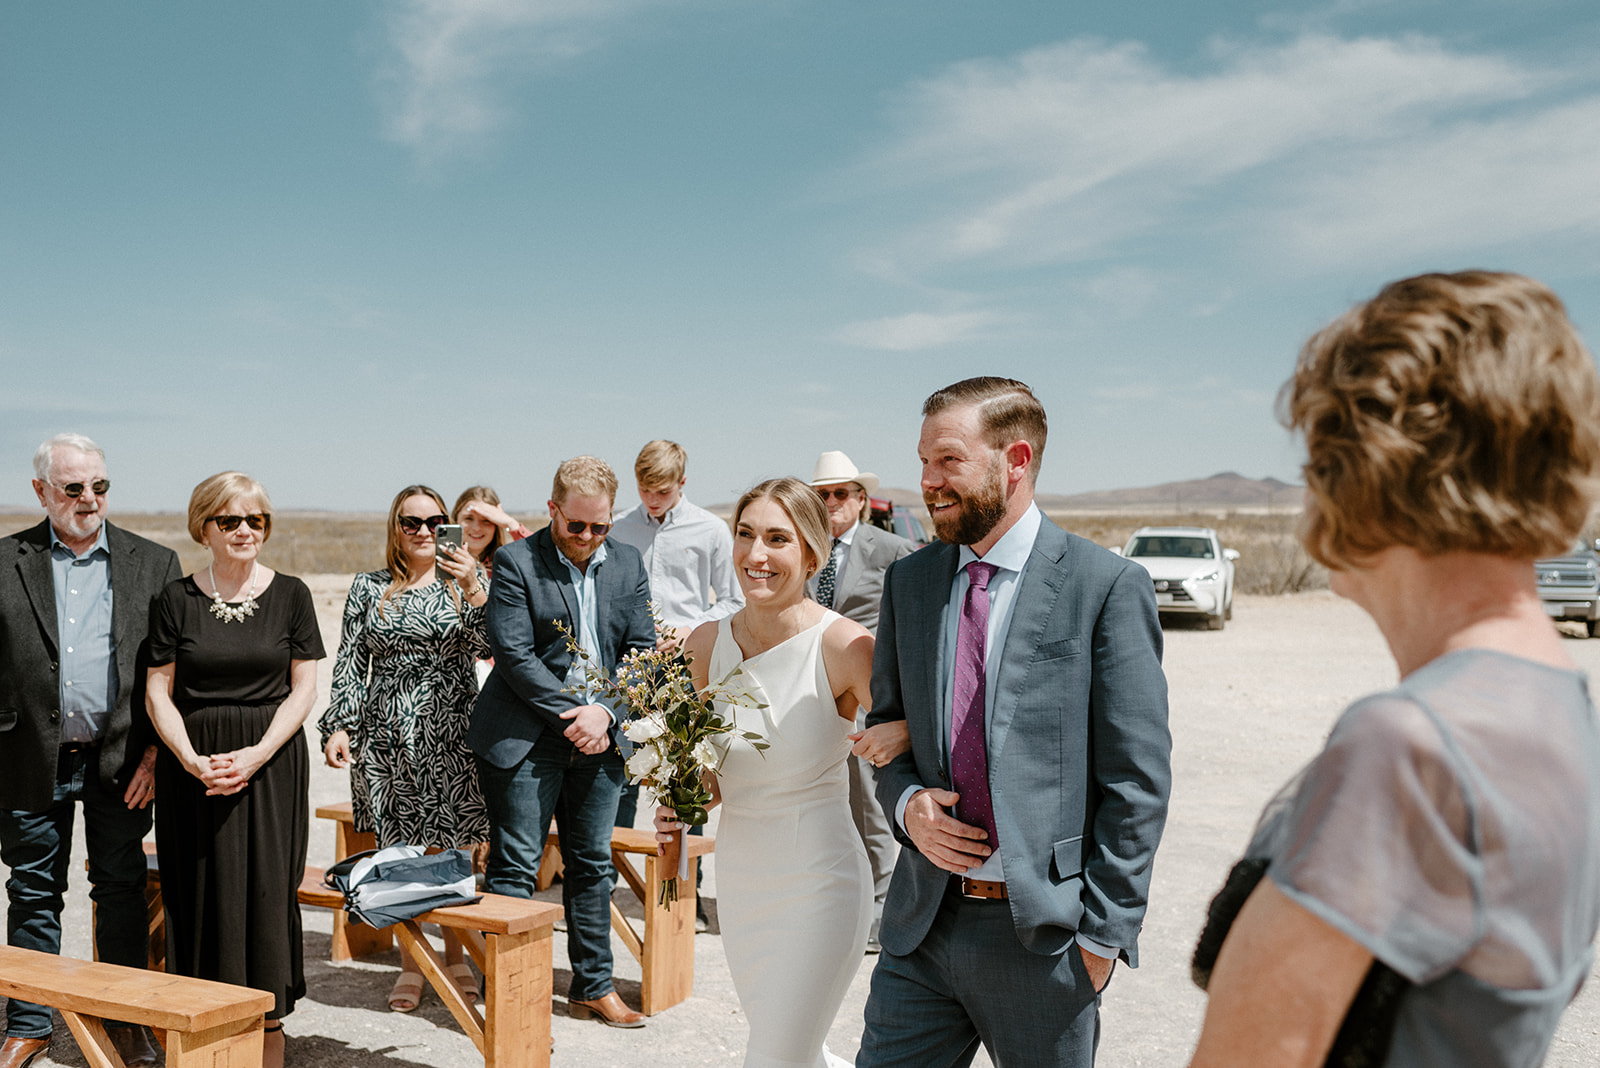 A small wedding at Caldera Chapel in Texas